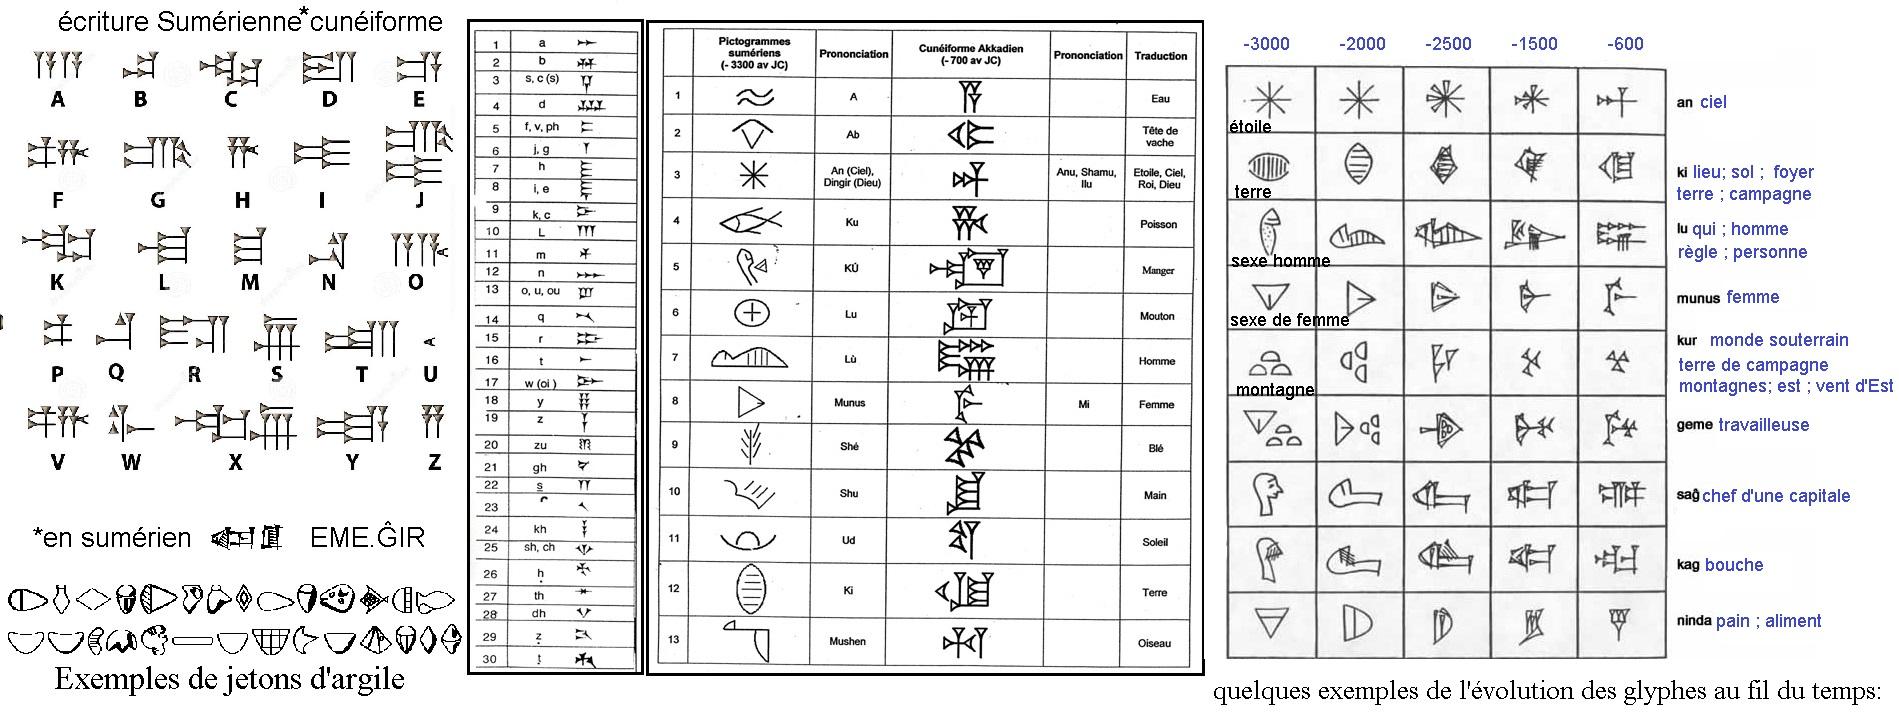 Ecriture sumerienne cuneiforme